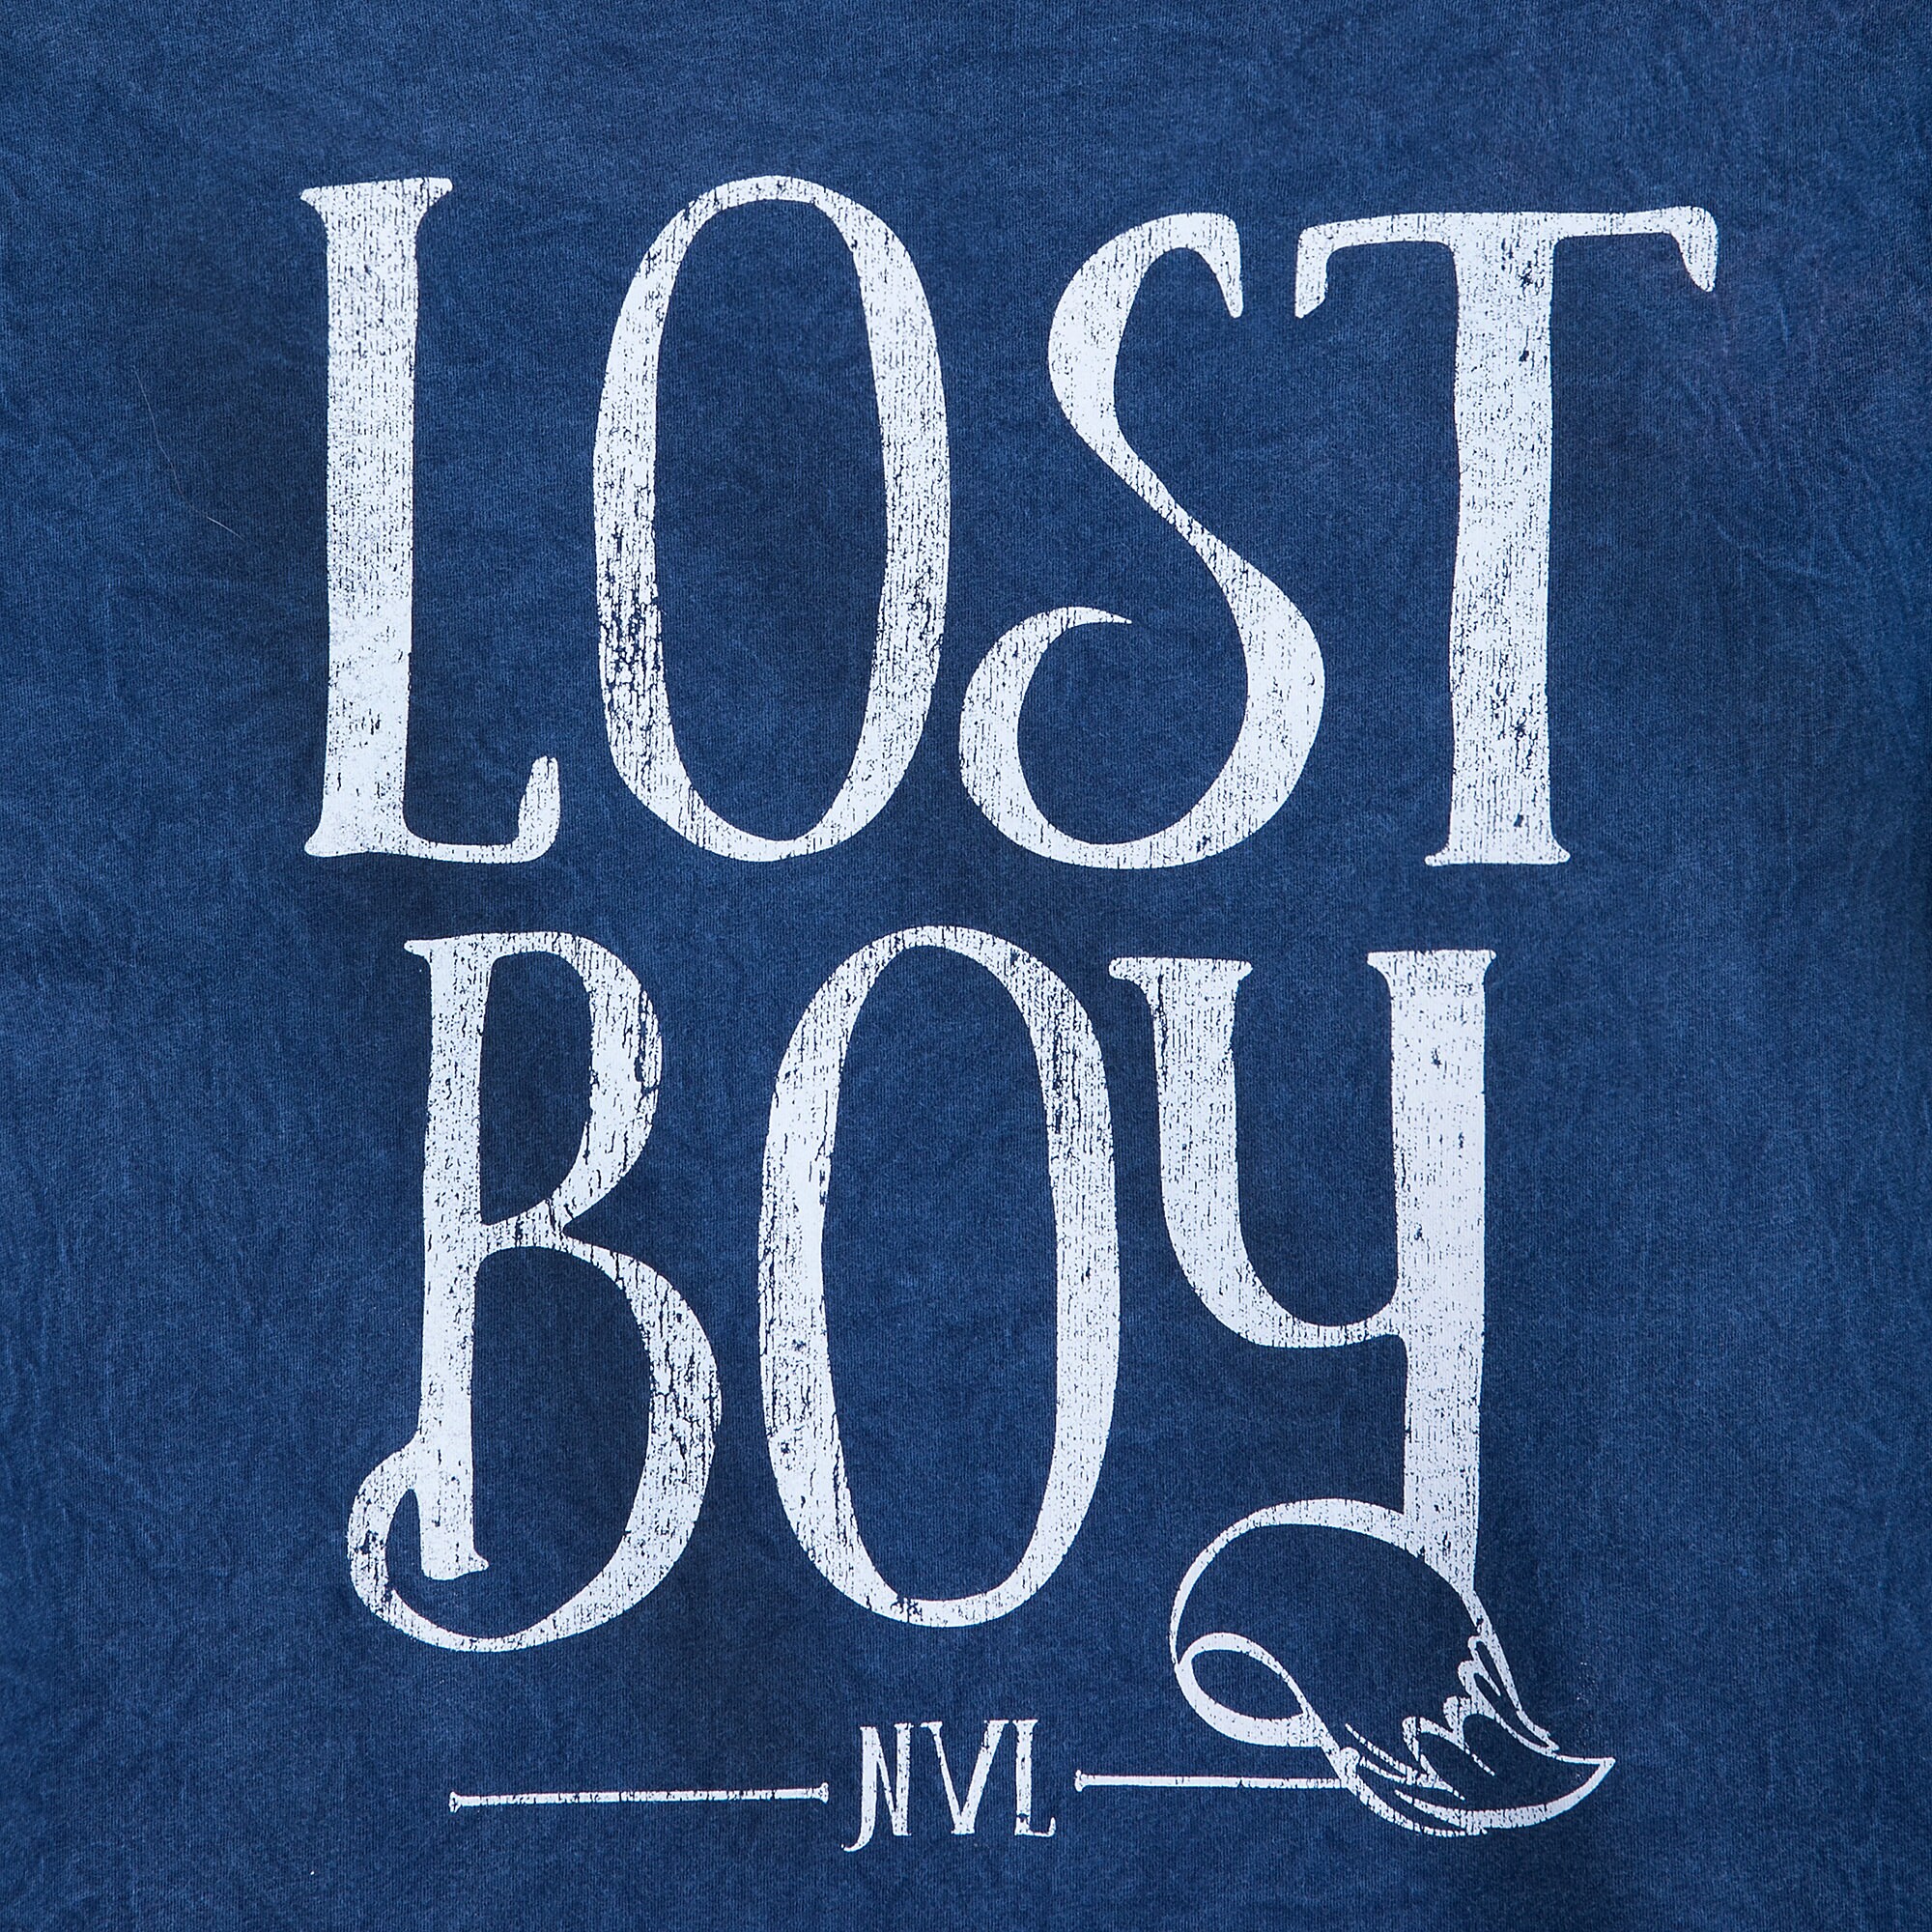 Lost Boy T-Shirt for Men - Peter Pan